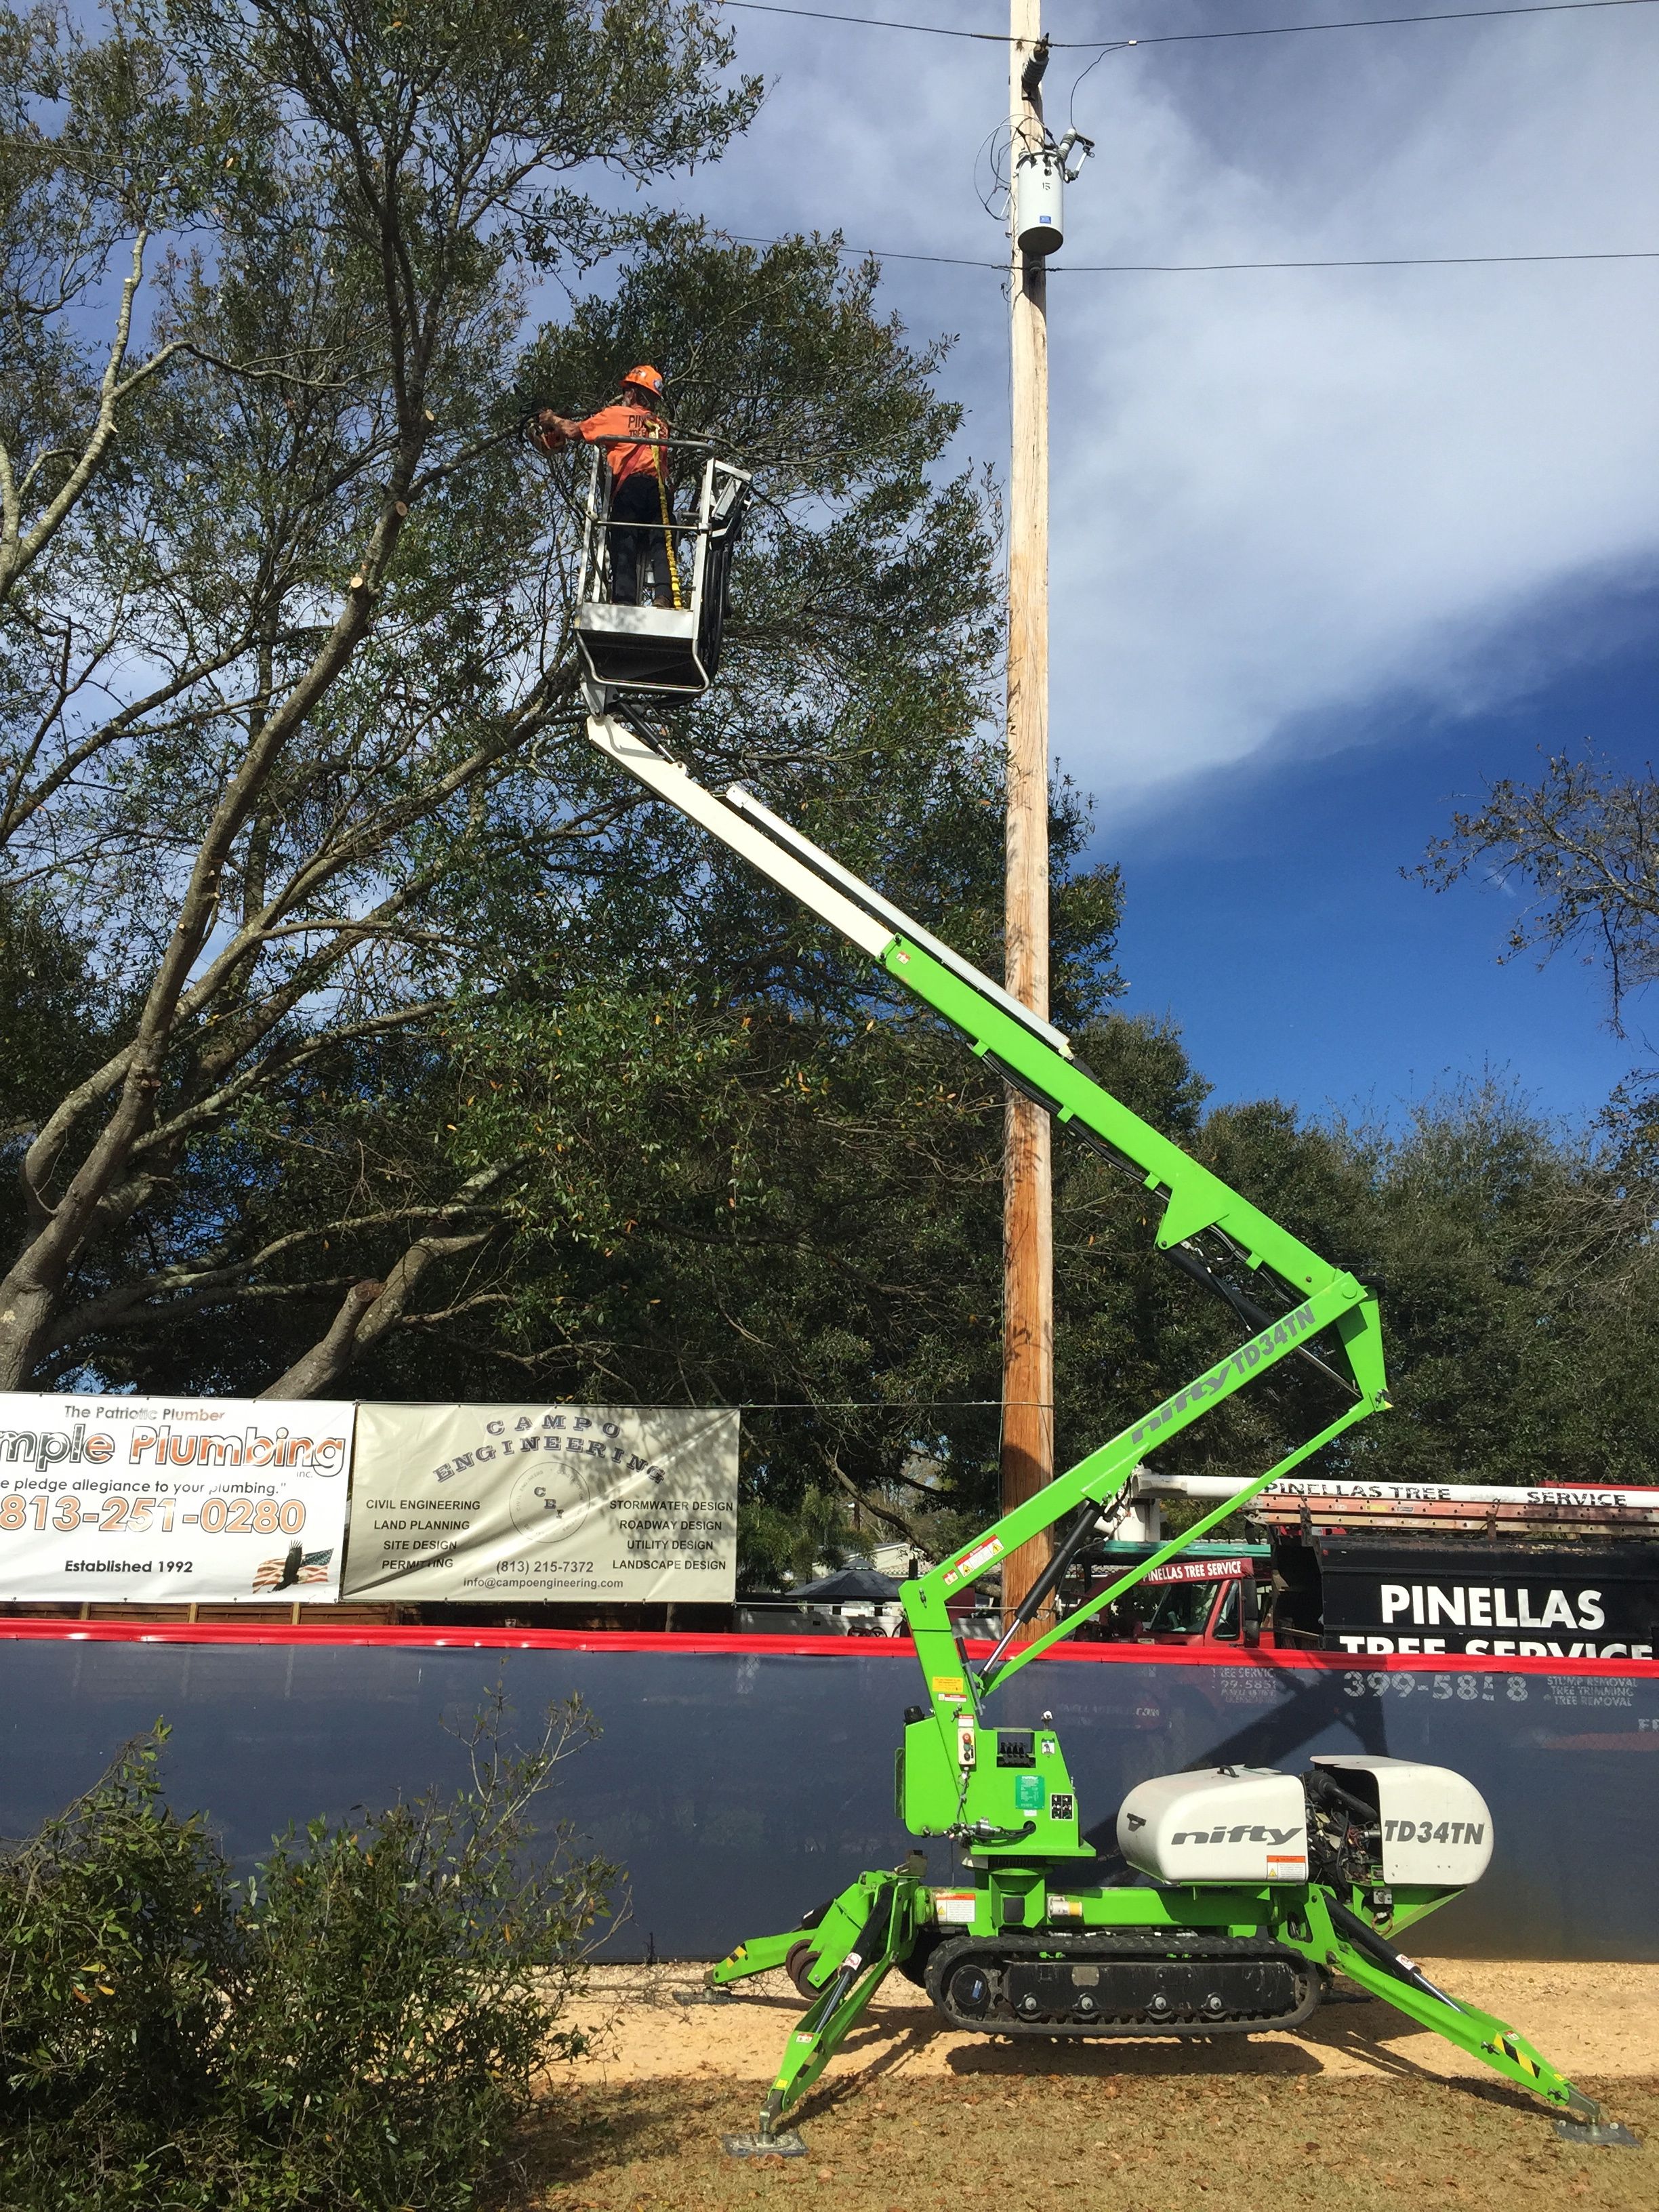 Pinellas Tree Service Equipment